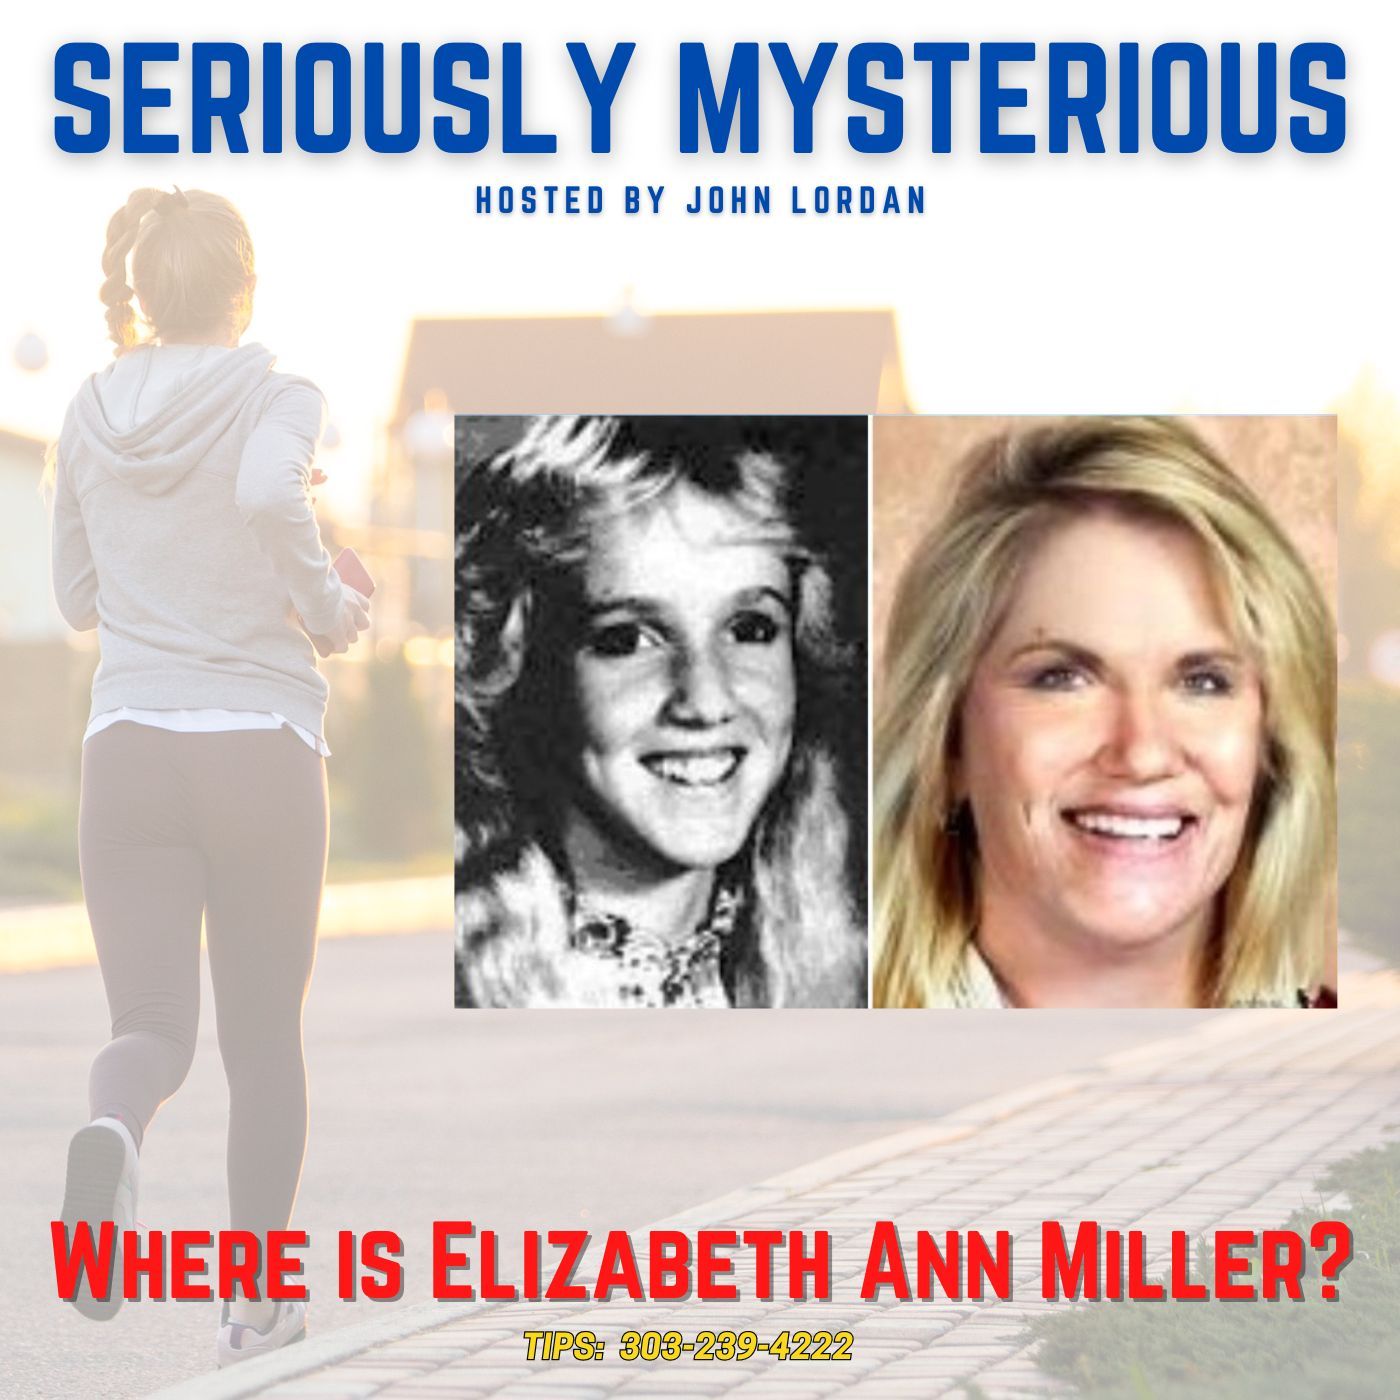 Where is Elizabeth Ann Miller?